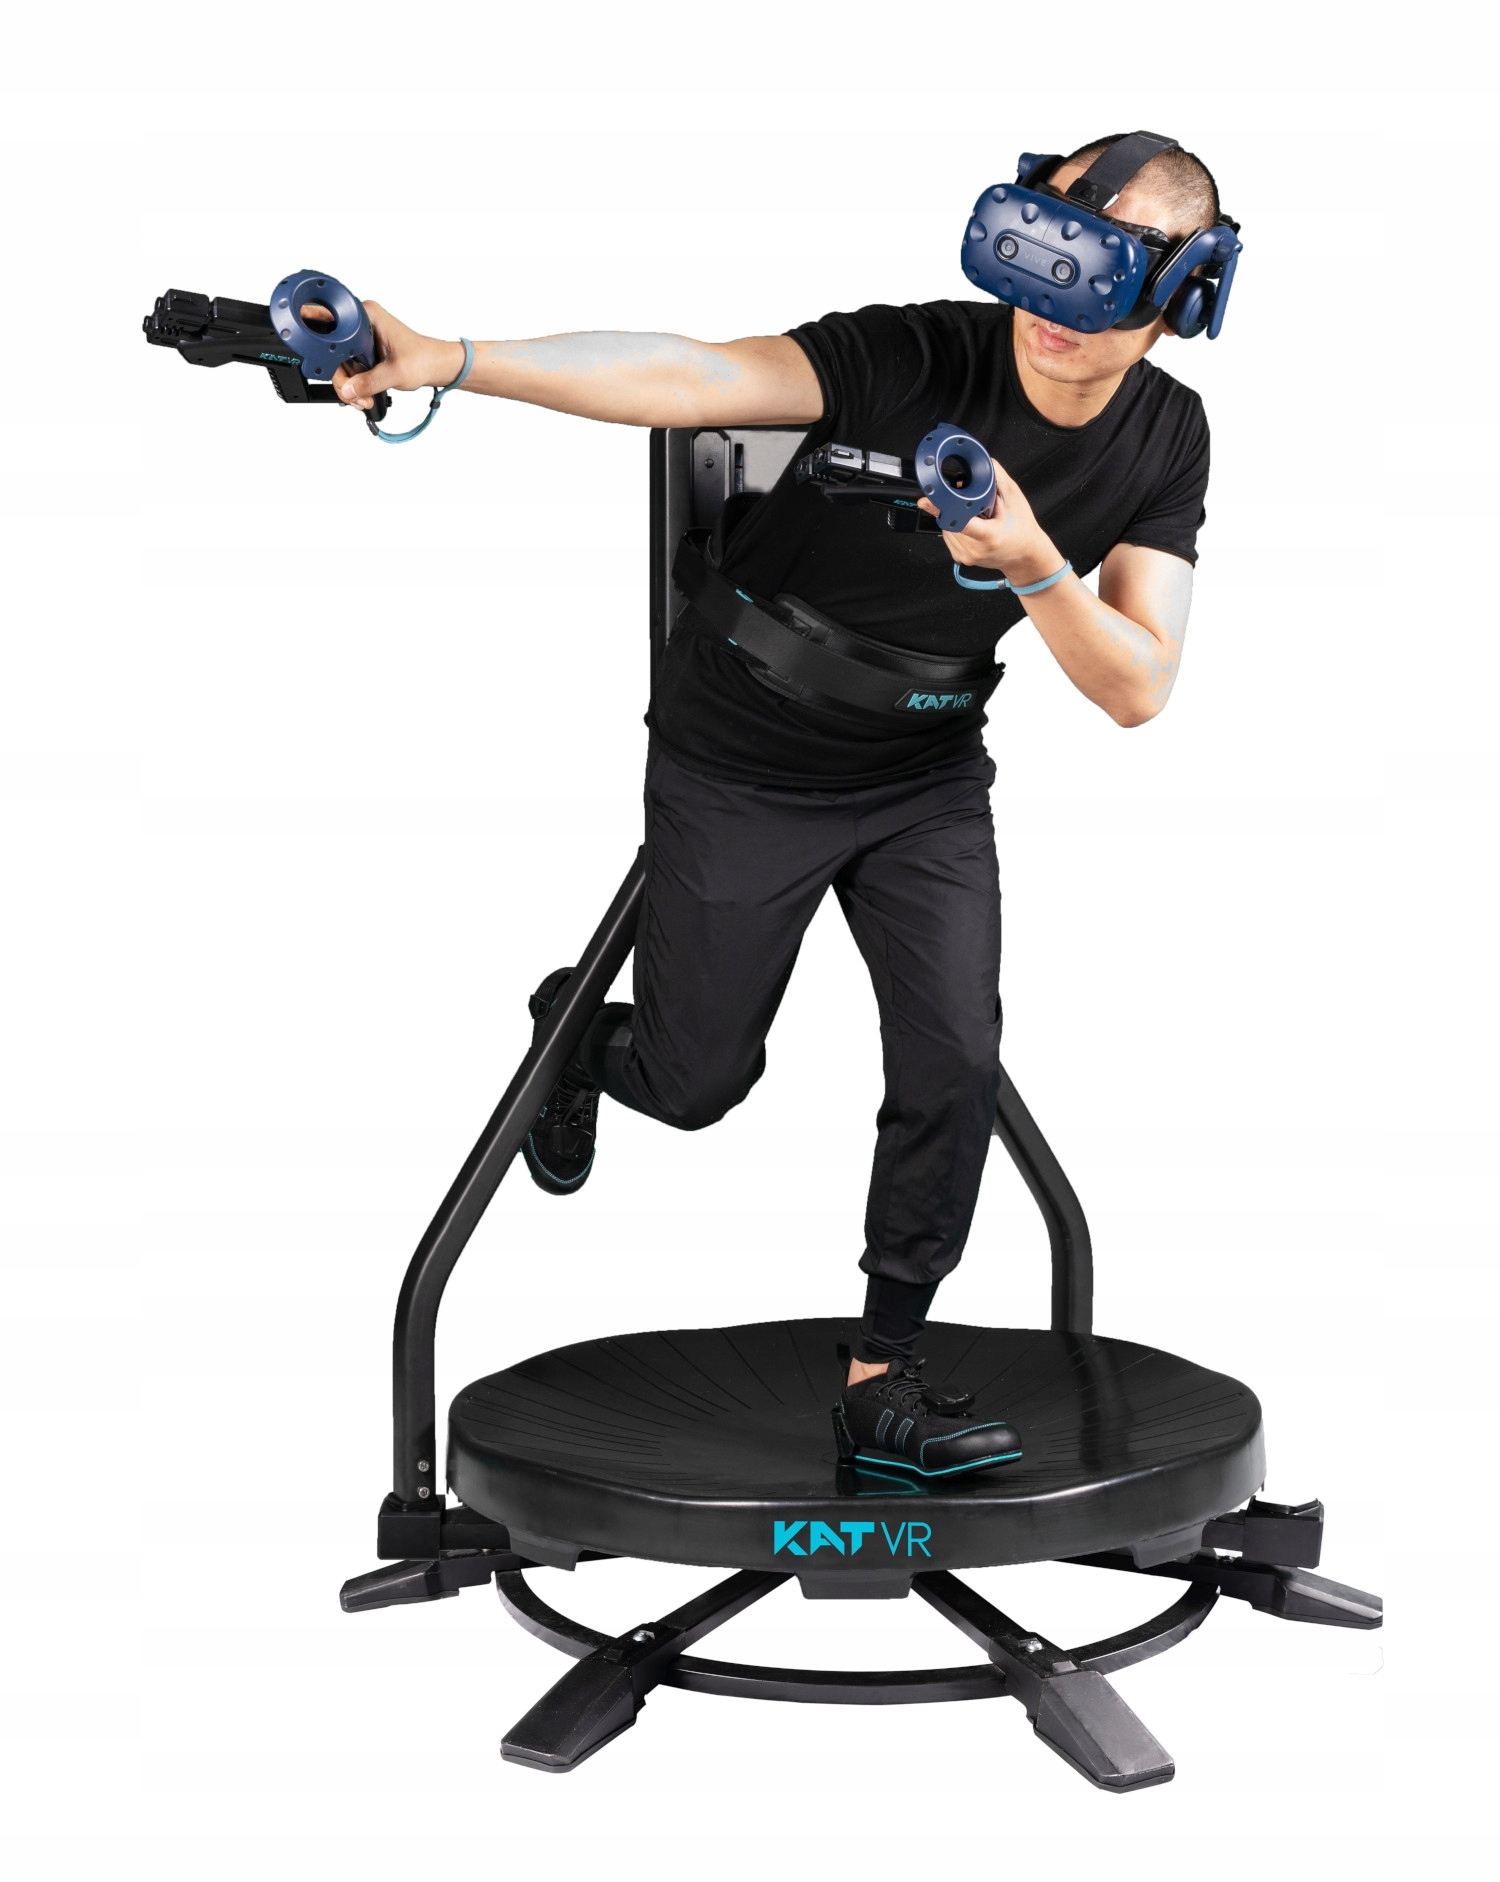 Kat vr. Беговая дорожка VR kat walk c. Беговая VR платформа kat walk Mini. Дорожка для виртуальной реальности. Kat walk c 2(Plus).